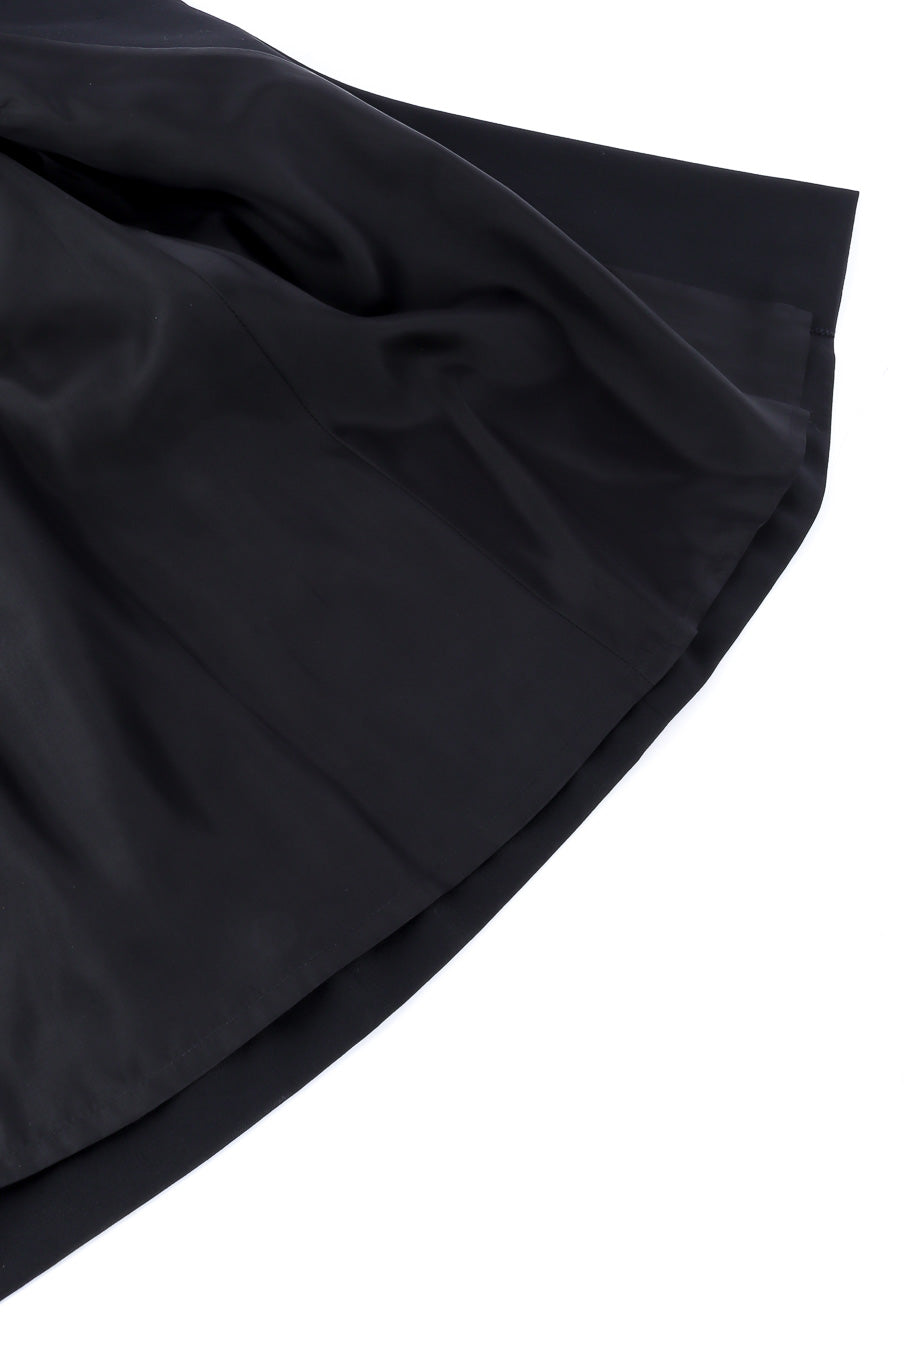 Vintage Yves Saint Laurent Collared Blazer Dress lining closeup @Recessla